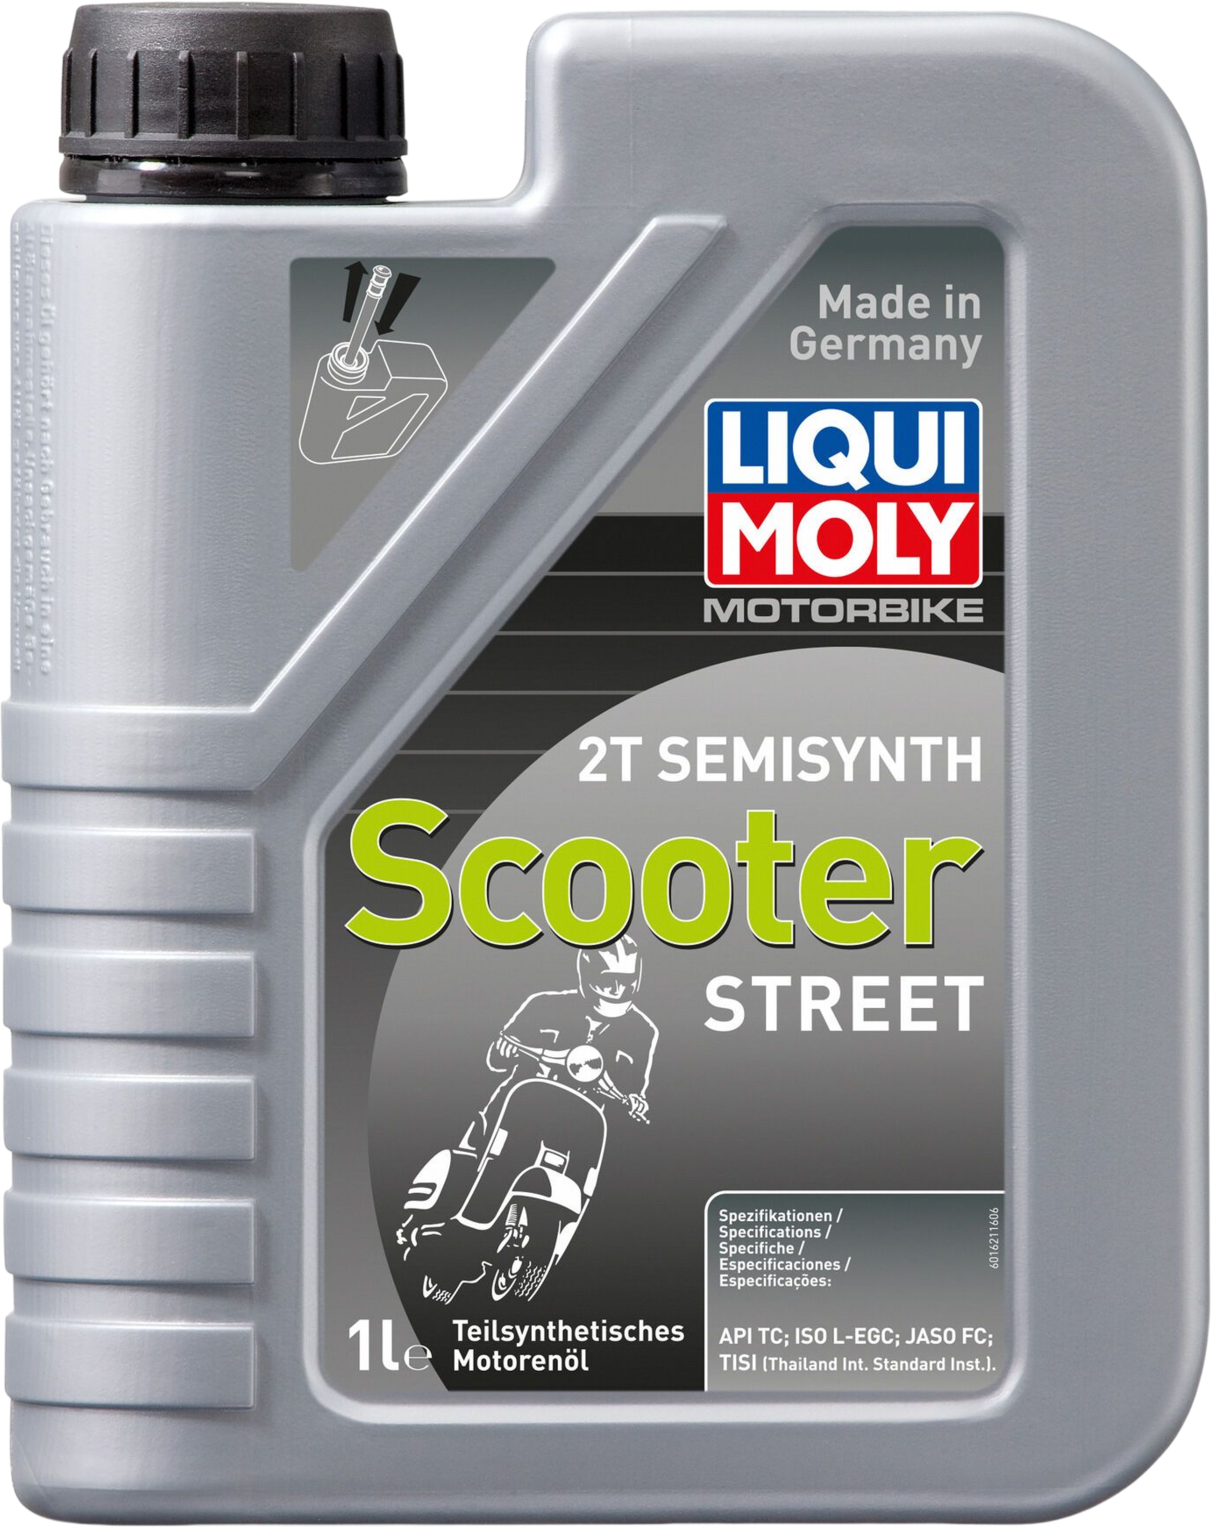 Liqui Moly Motorbike 2T Semisynth Scooter Street, 1 lt